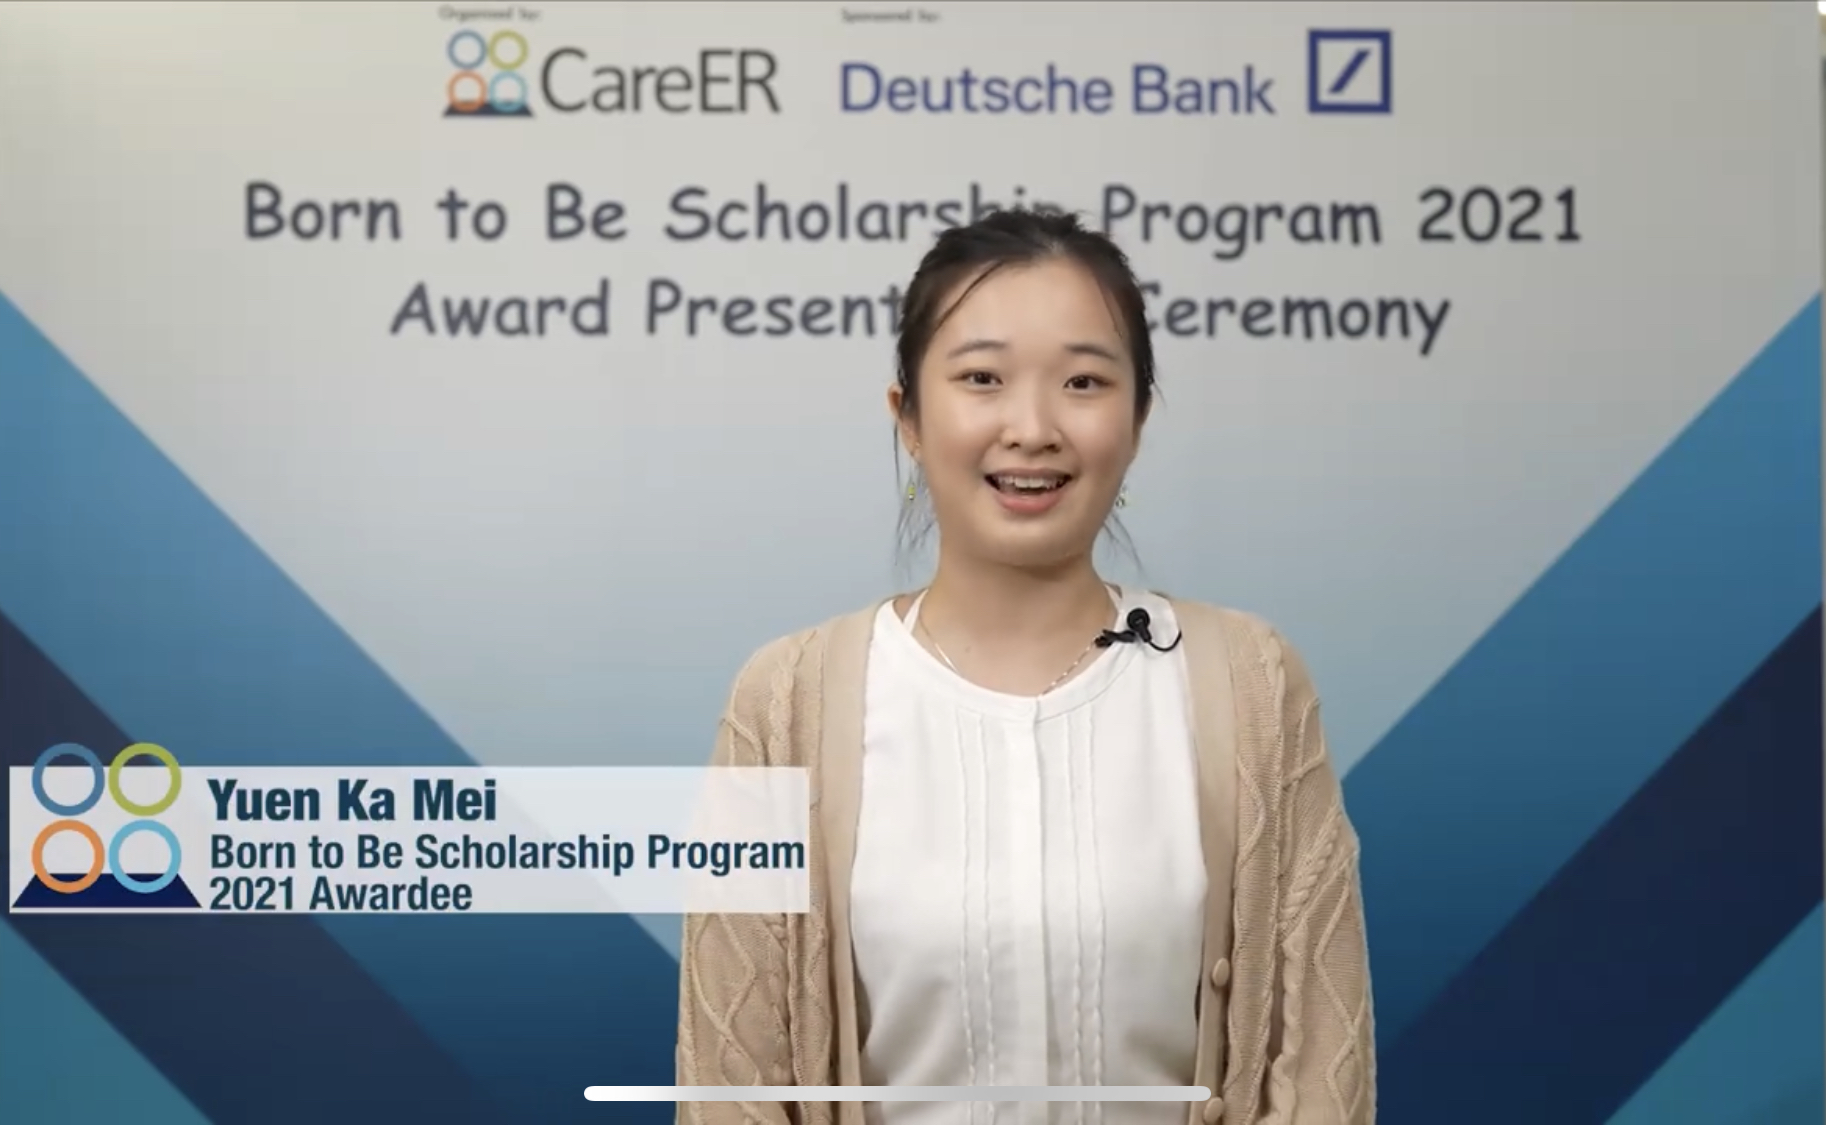 image - Deutsche Bank - CareER Born to Be Scholarship Presentation Ceremony 